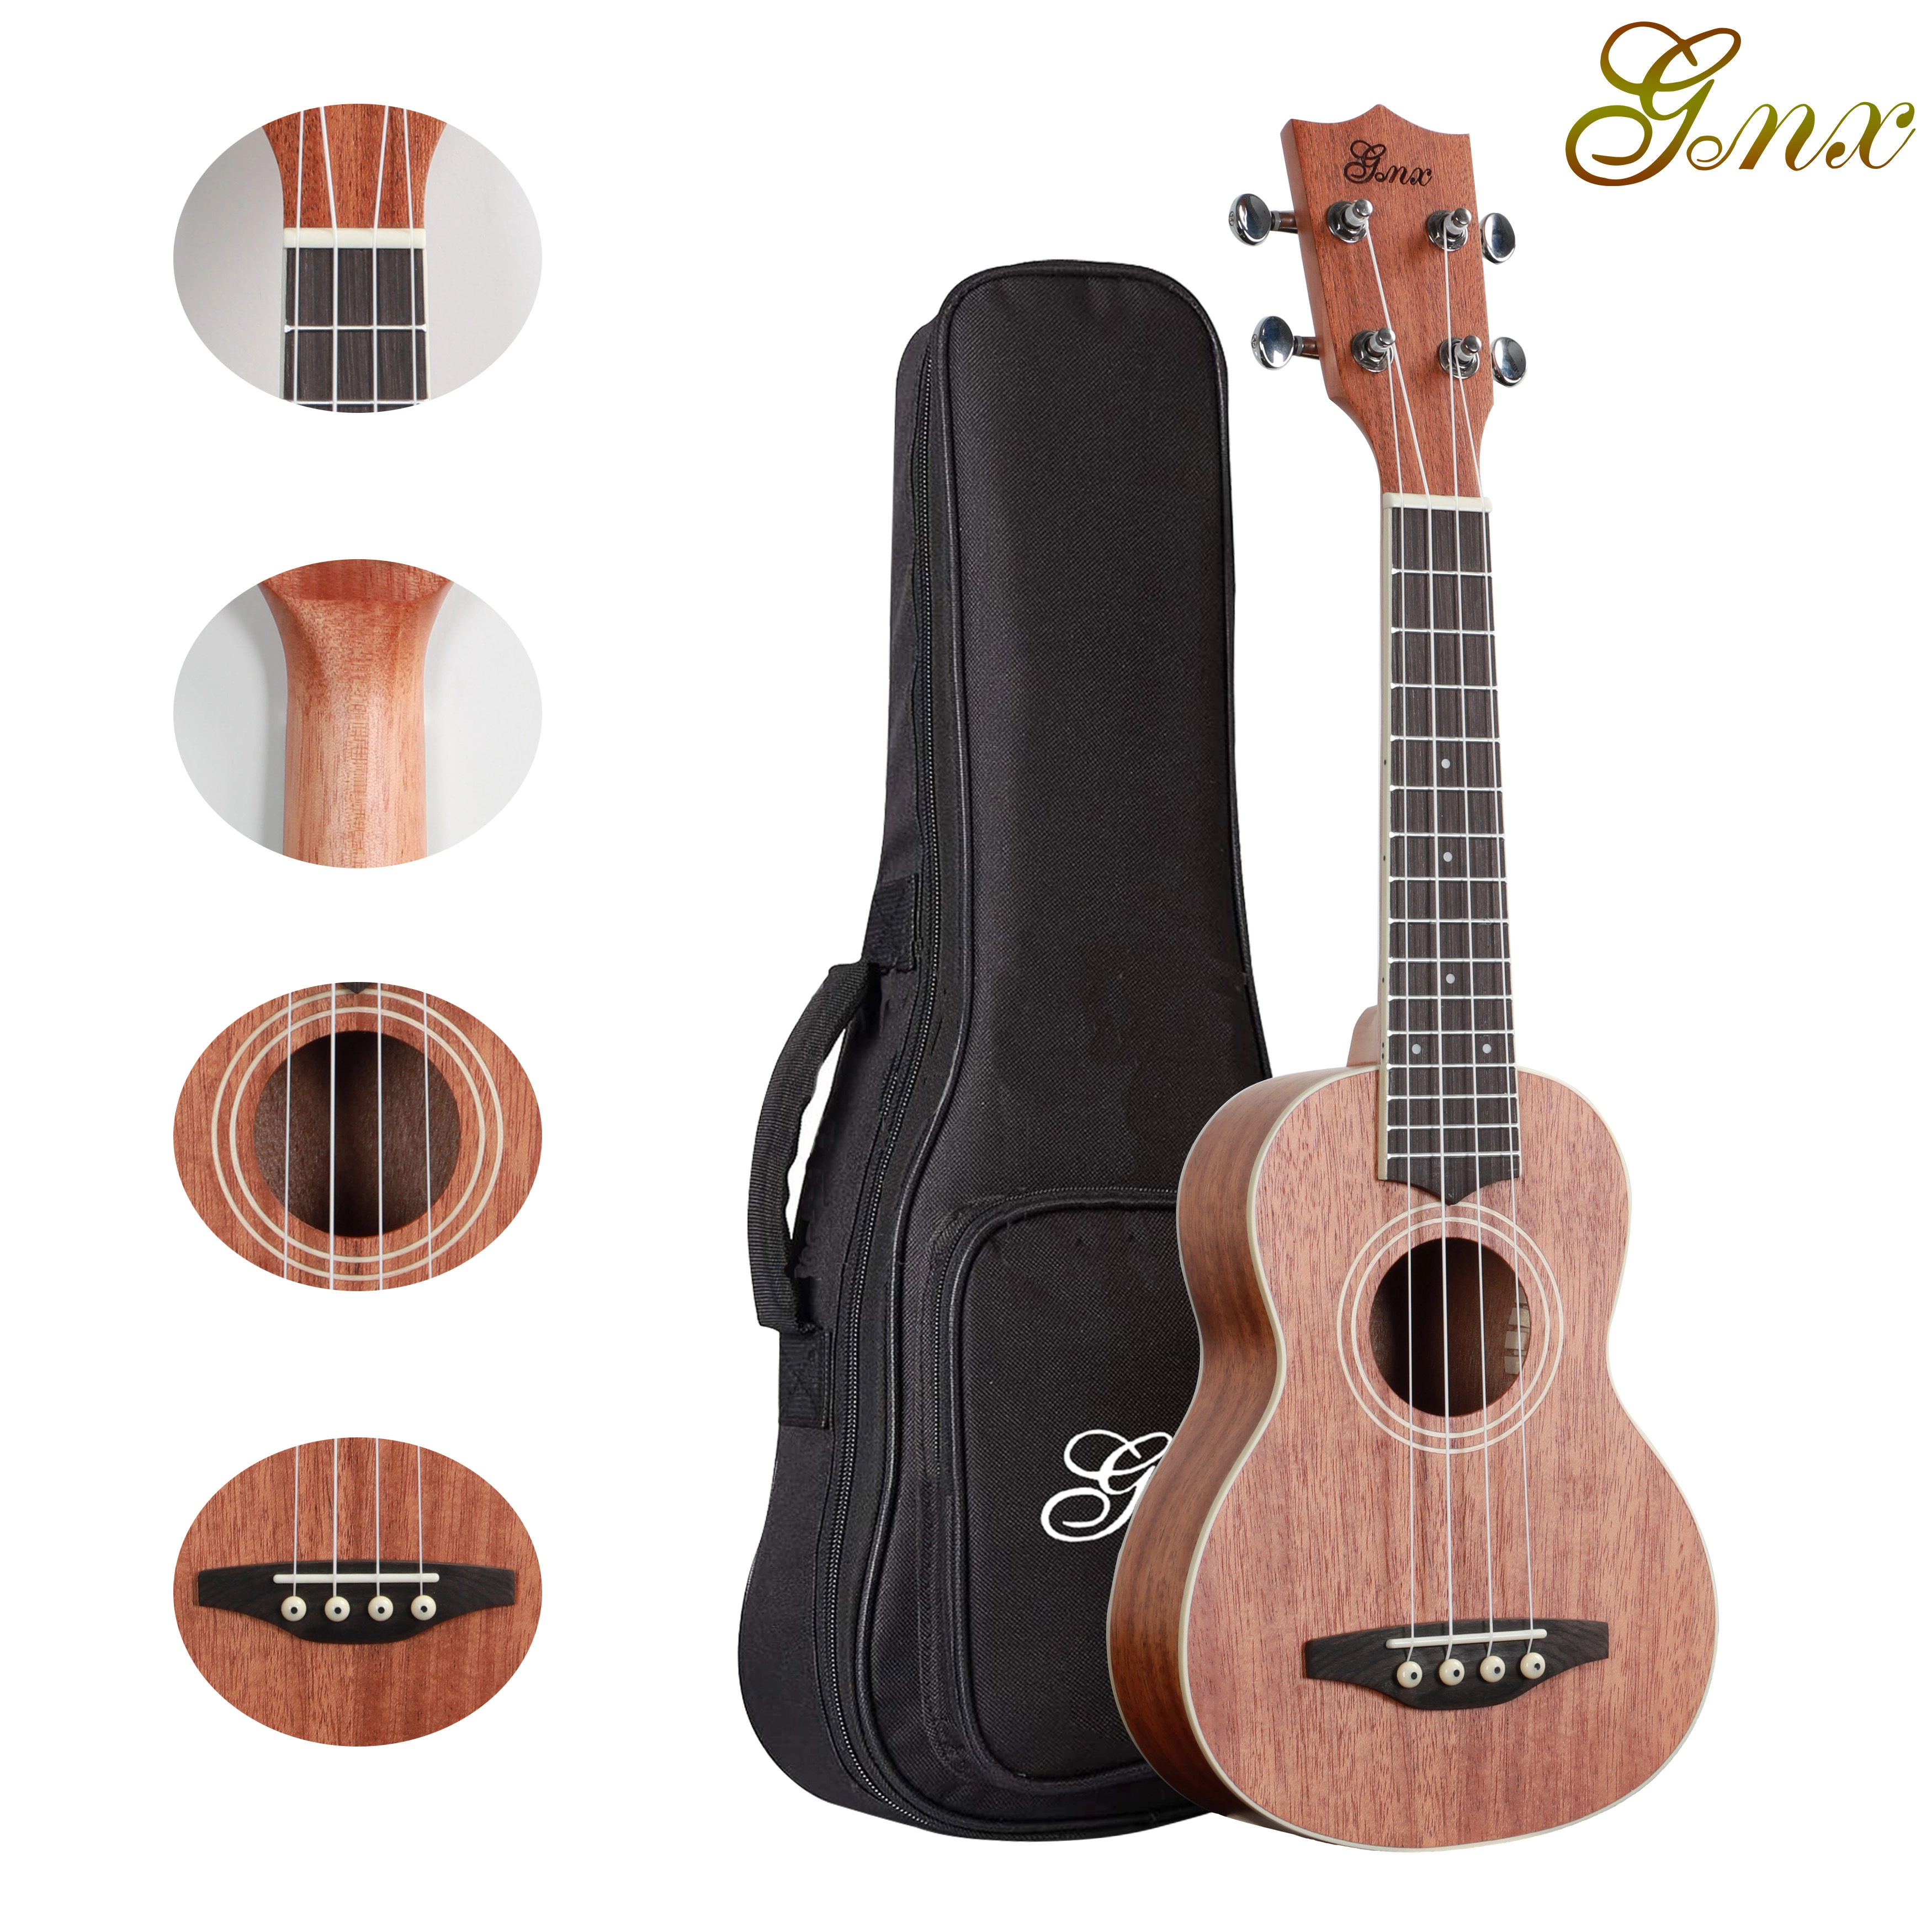 porcelana Made in China high quality ukulele of Soprano fabricante